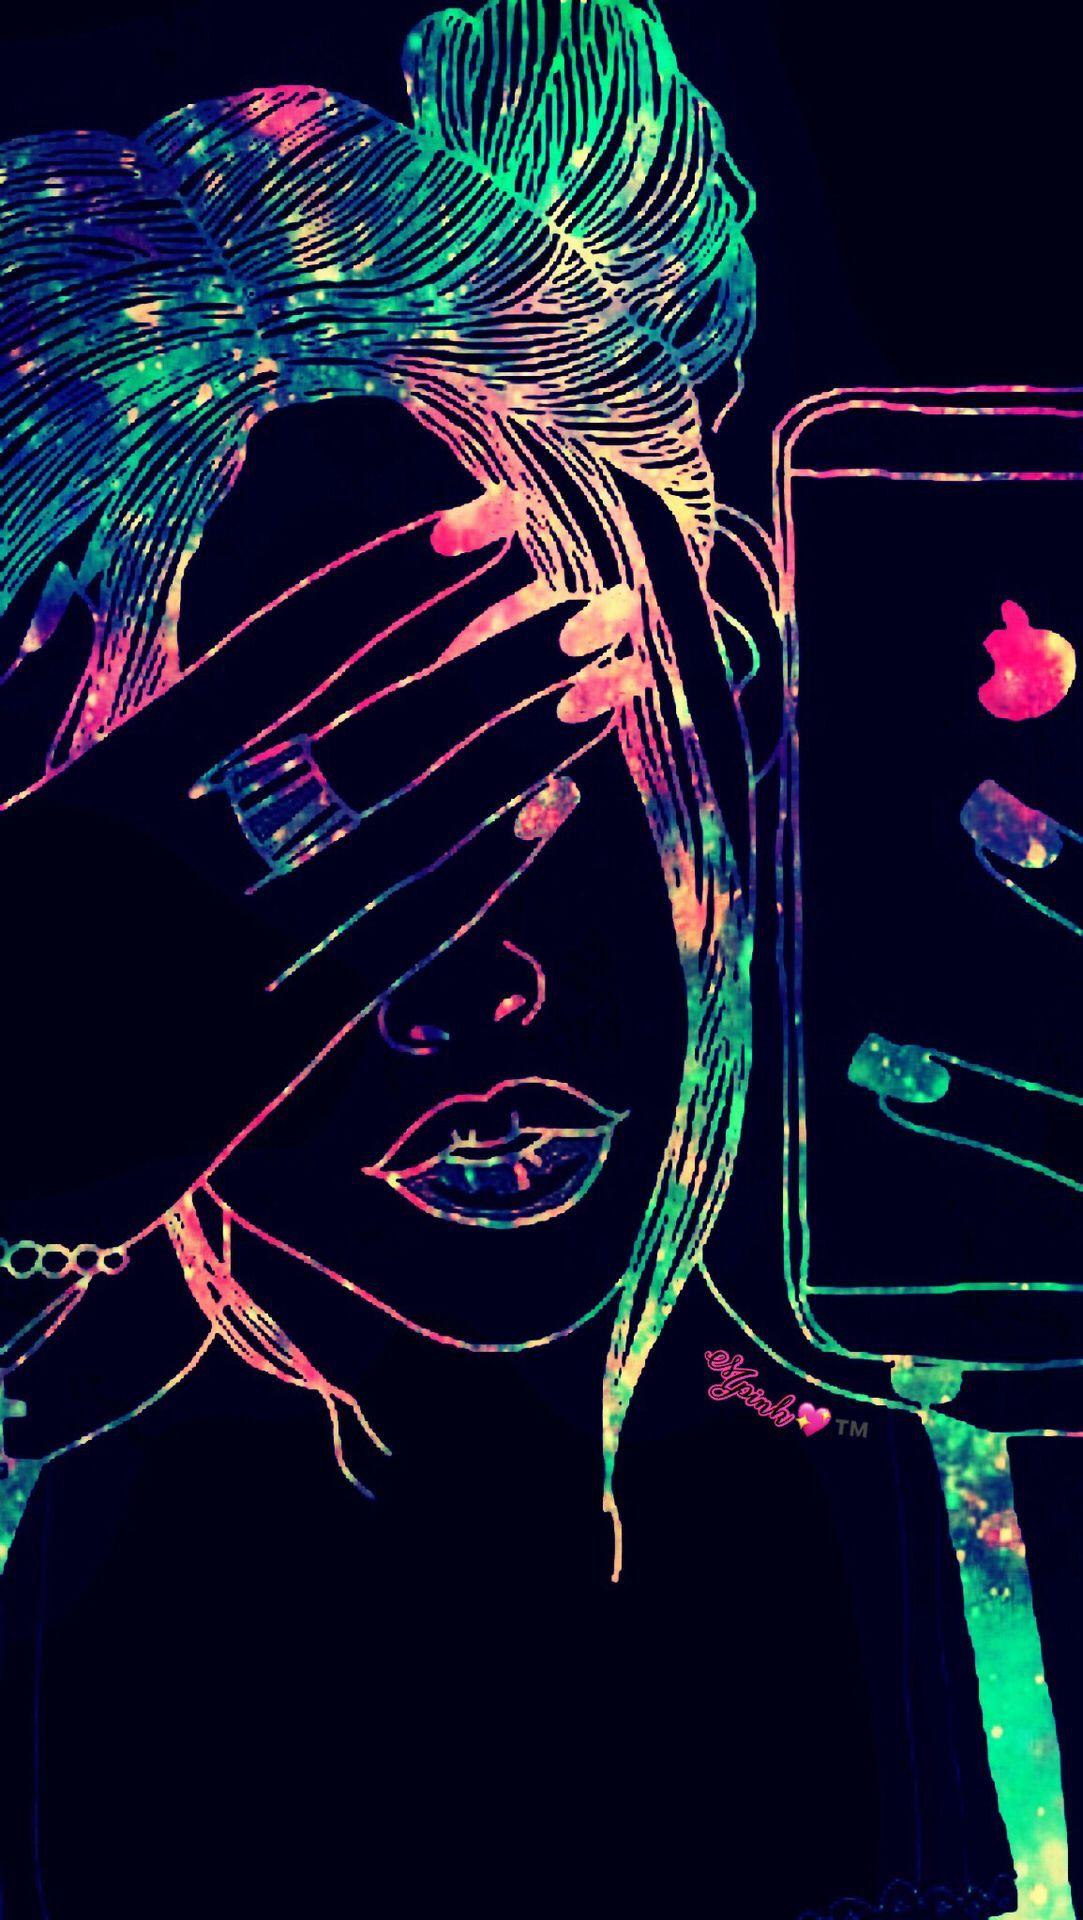 Neon Girly Girl Wallpapers - Top Free Neon Girly Girl ...